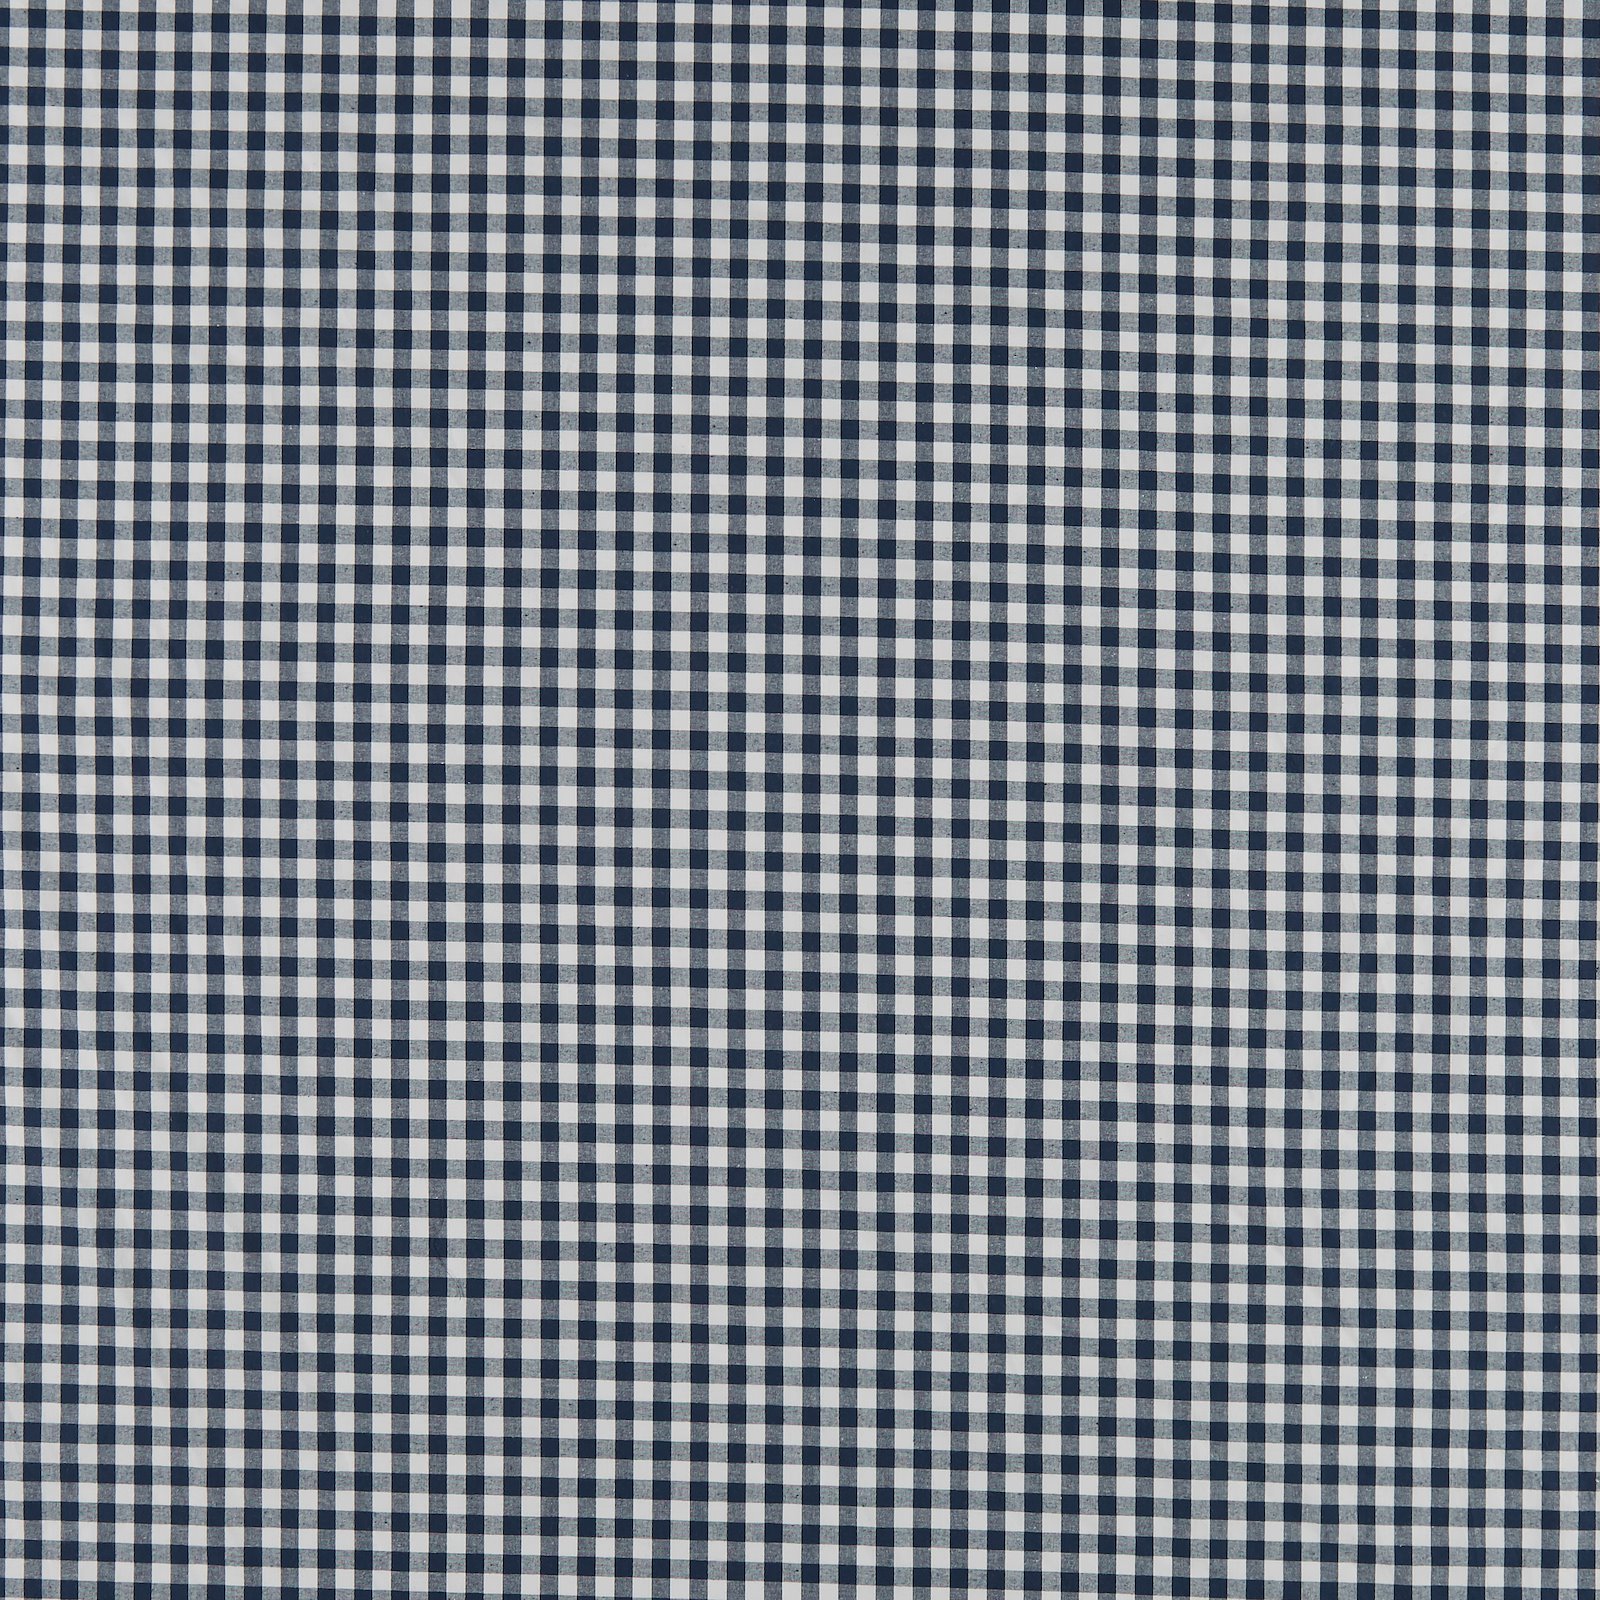 Cotton yarn dyed dark navy/white check 780893_pack_sp